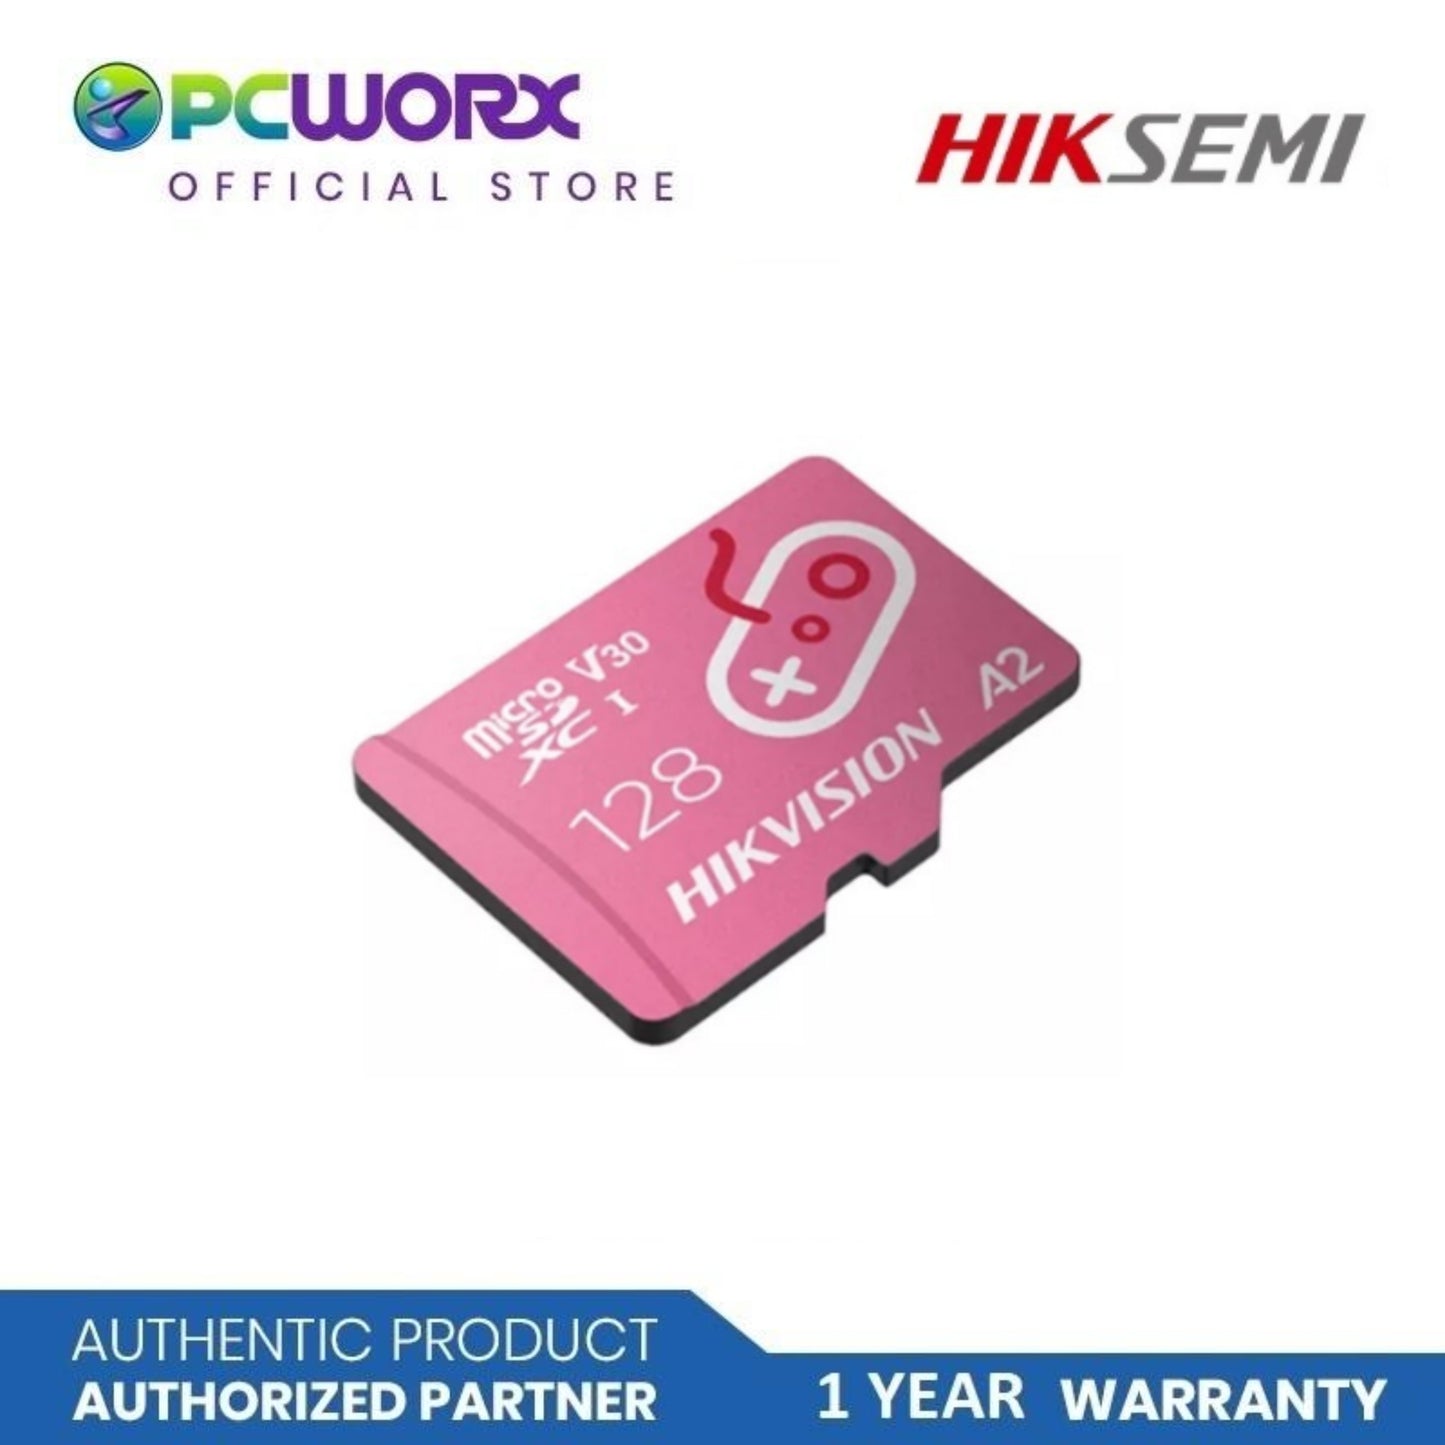 Hiksemi HS-TF-G2 128GB / 256GB MicroSD Card SDXC Class 10 and UHS-1 V10 3D | Hiksemi 256GB MicroSD Card Memory Card | 128GB Memory Card MicroSD